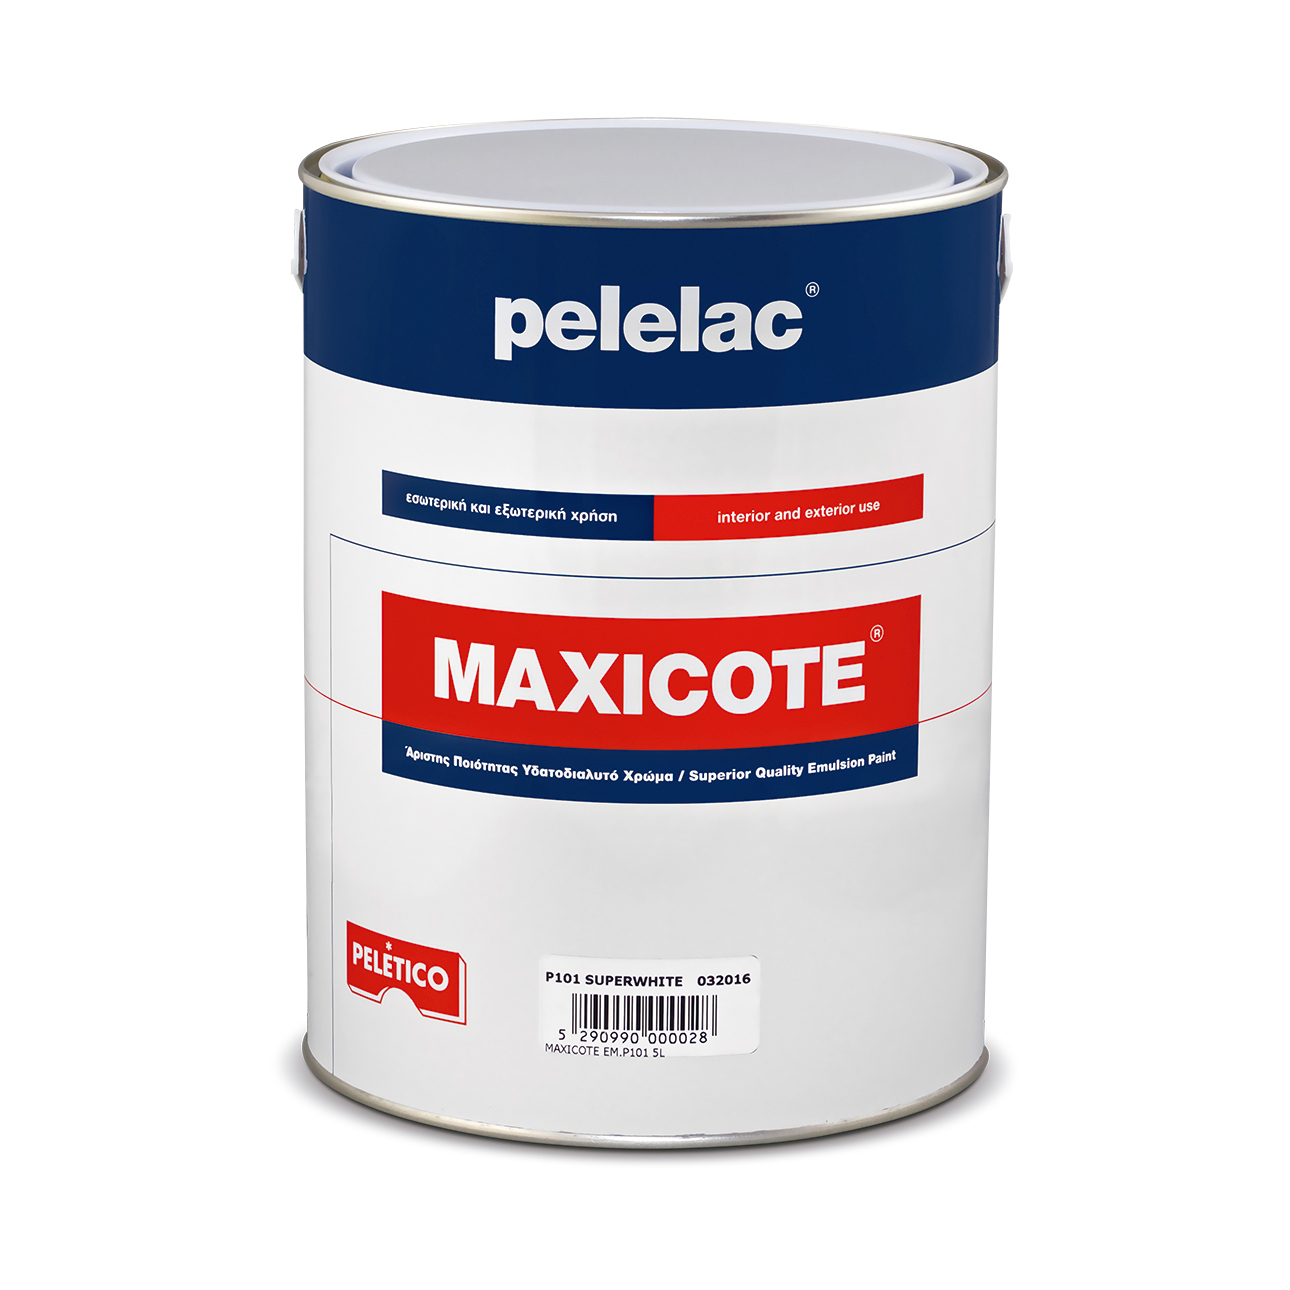 PELELAC MAXICOTE® EMULSION MAGNOLIA P104 10L 